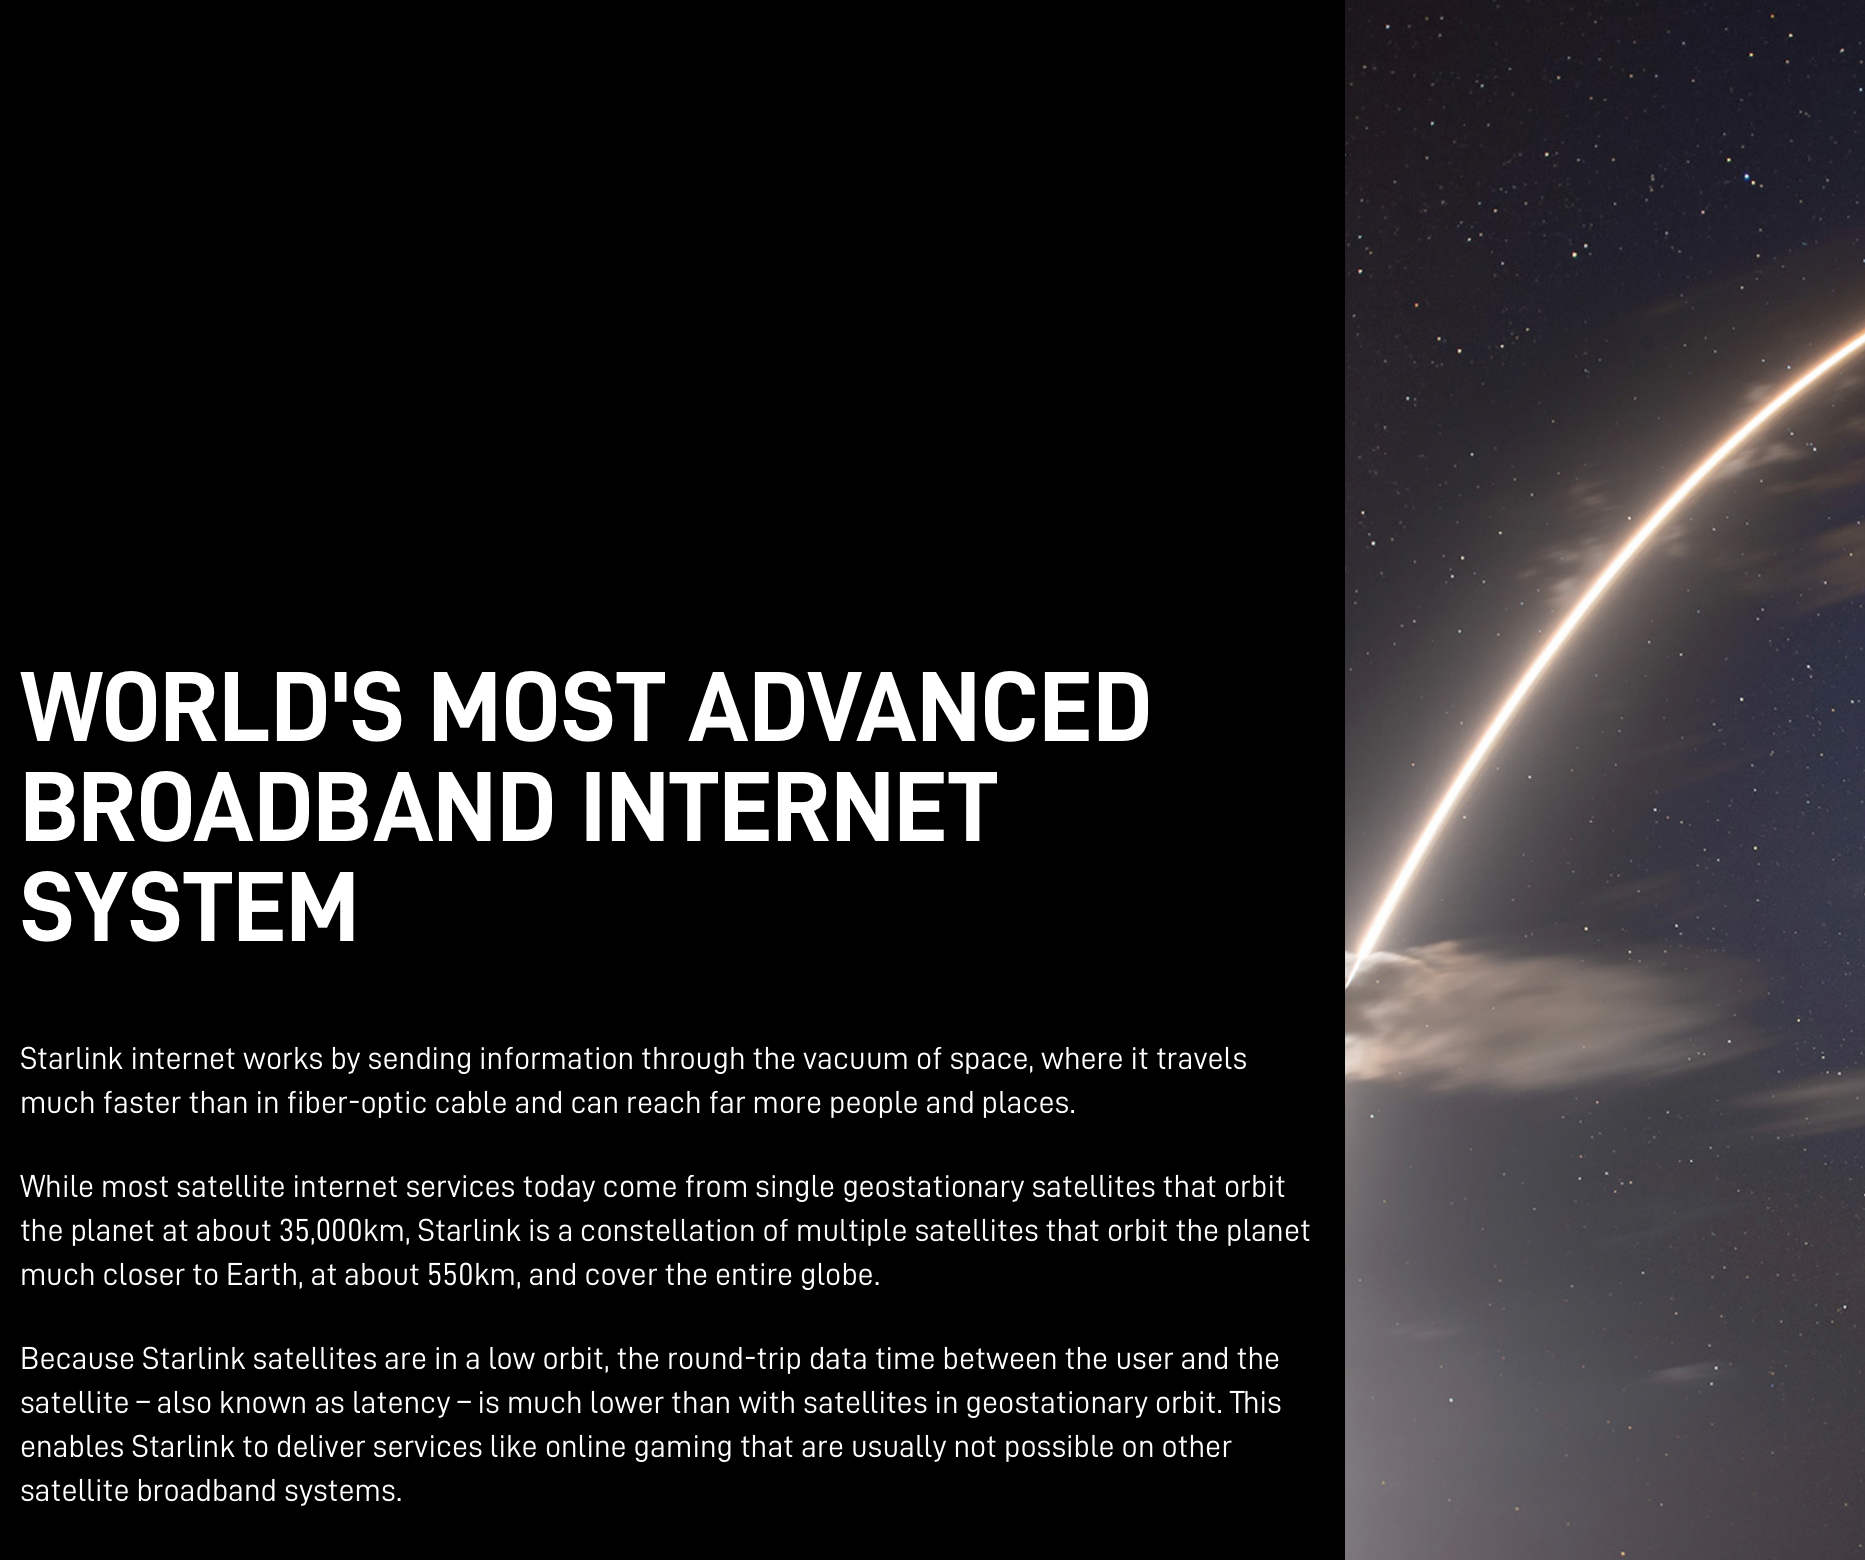 Starlink marketing the 'World's most advanced broadband internet system'